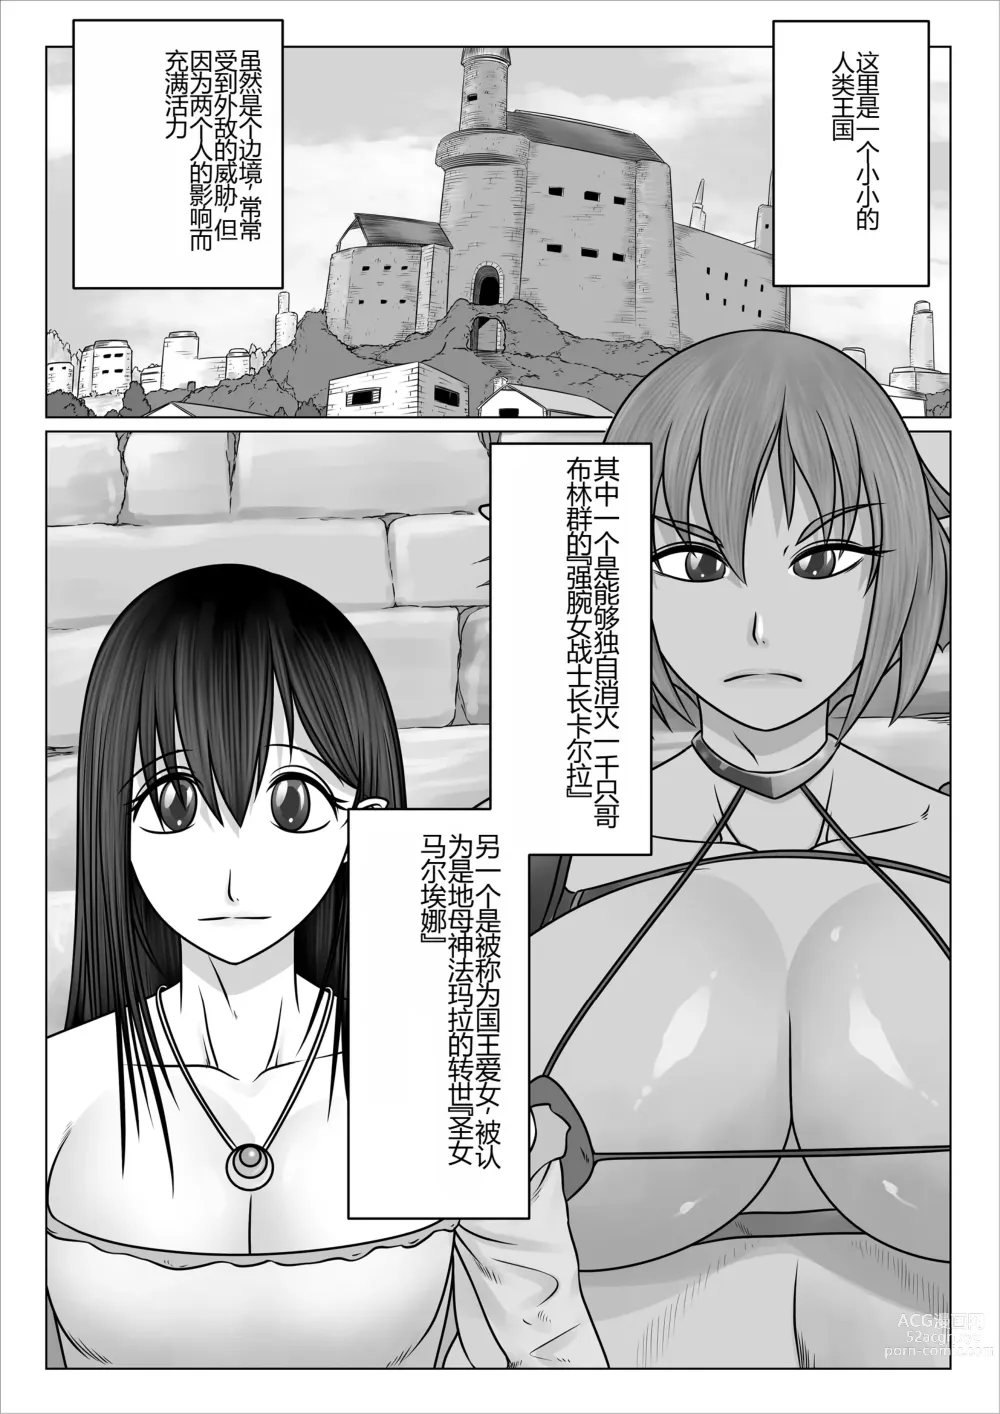 Page 3 of doujinshi 被誉为英雄的女战士长艾尔拉被改造成淫乱的母猪成为一生奉献做为配种精液便器的故事